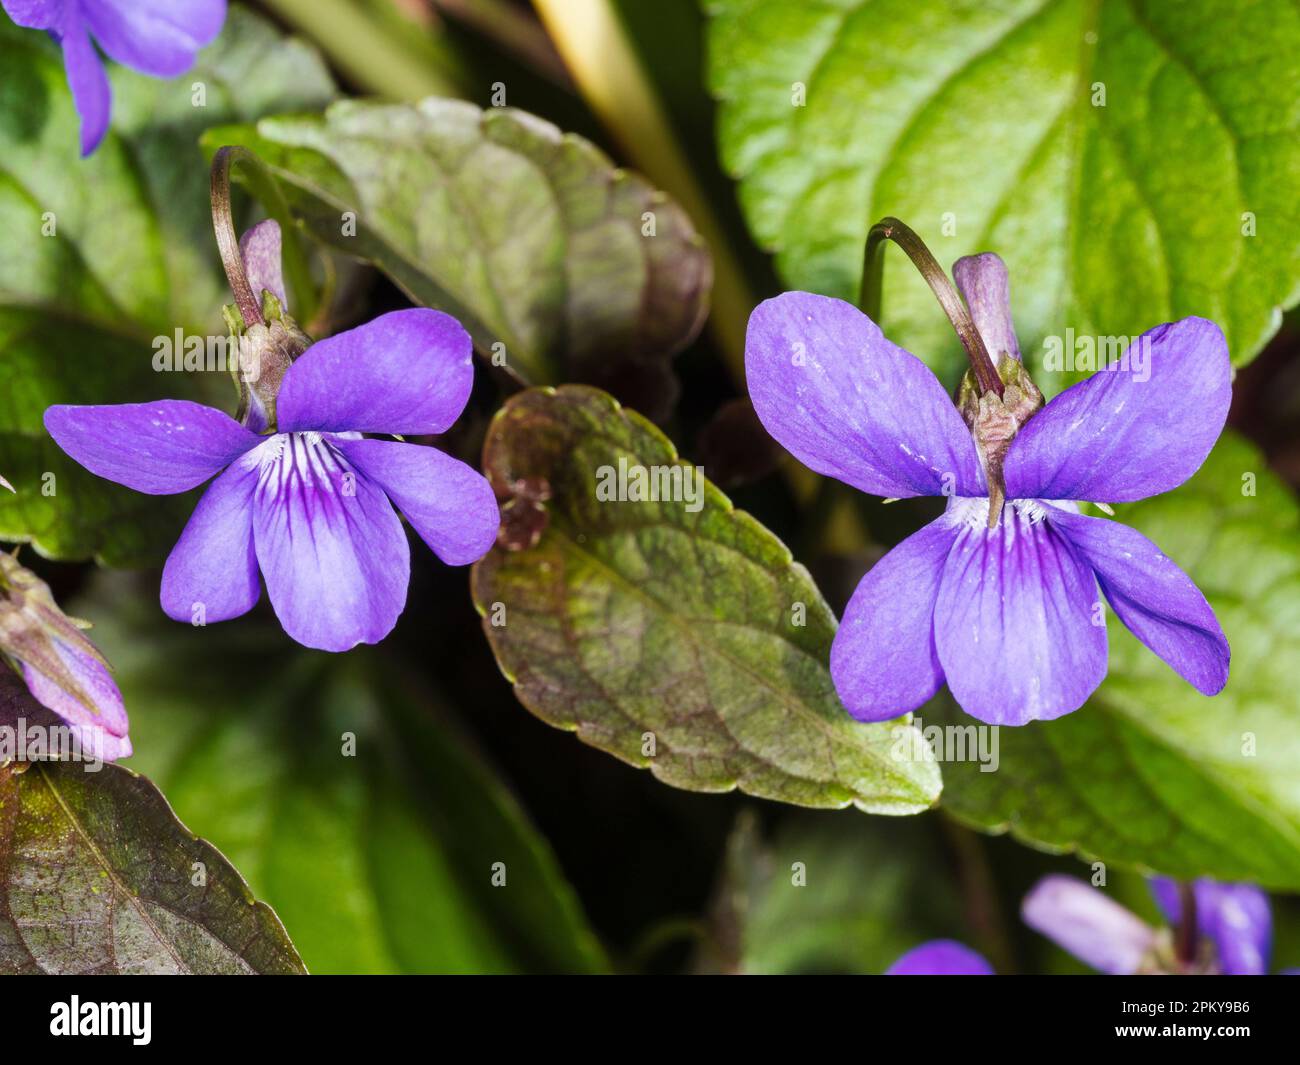 Dark foliage and flowers of the self seeding, hardy, spring flowering violet, Viola riviniana (Purpurea Group) Stock Photo